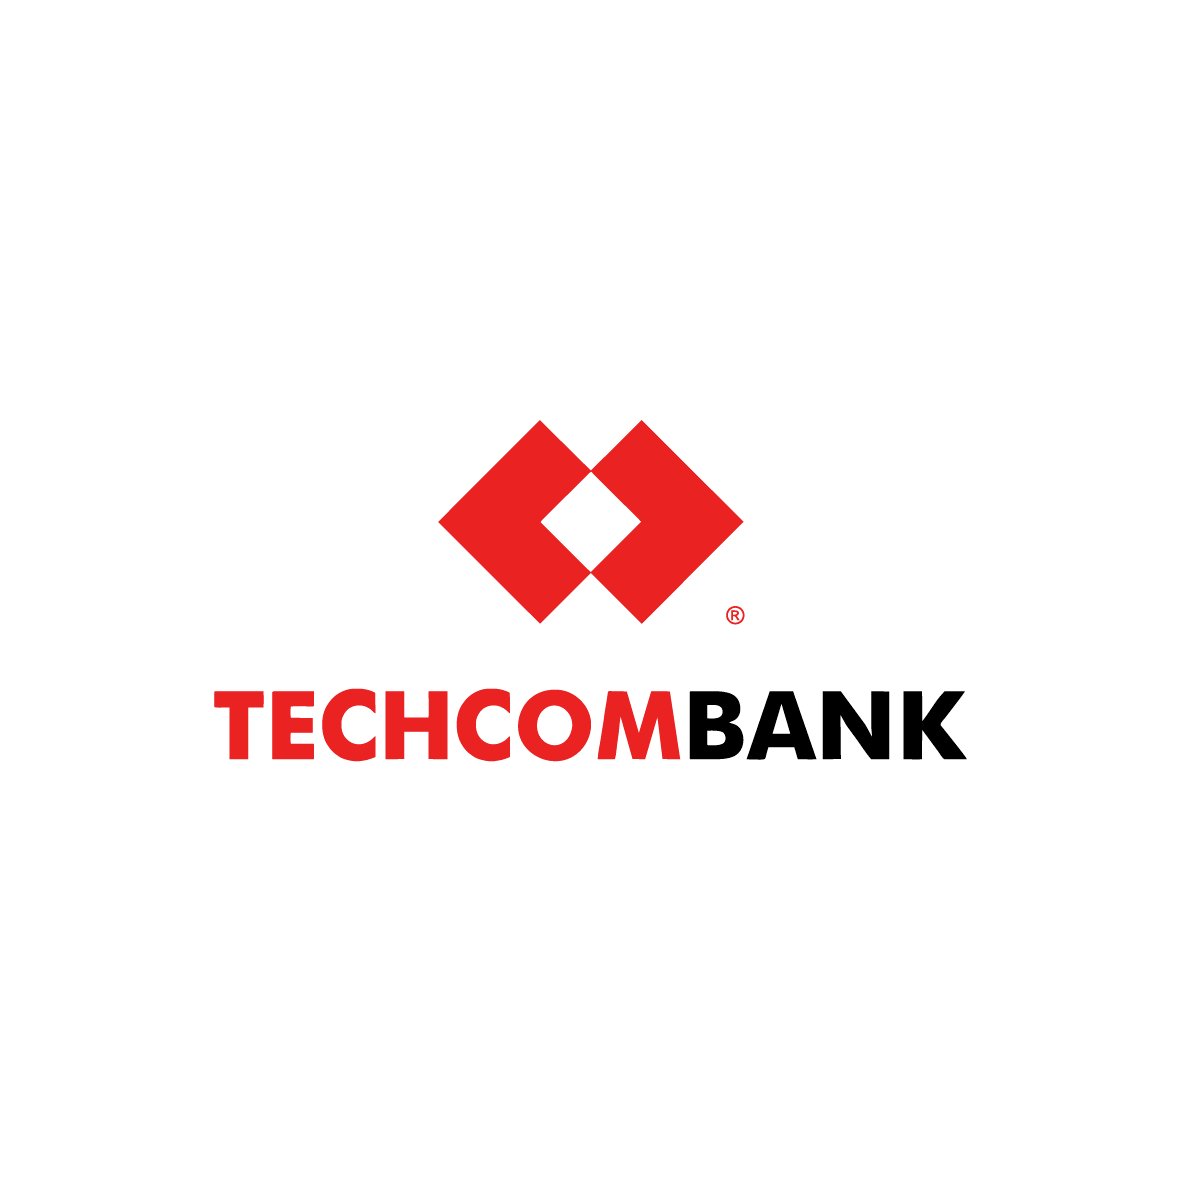 Tải logo Techcombank PNG, vector, CDR, AI, EPS, SVG, PDF miễn phí